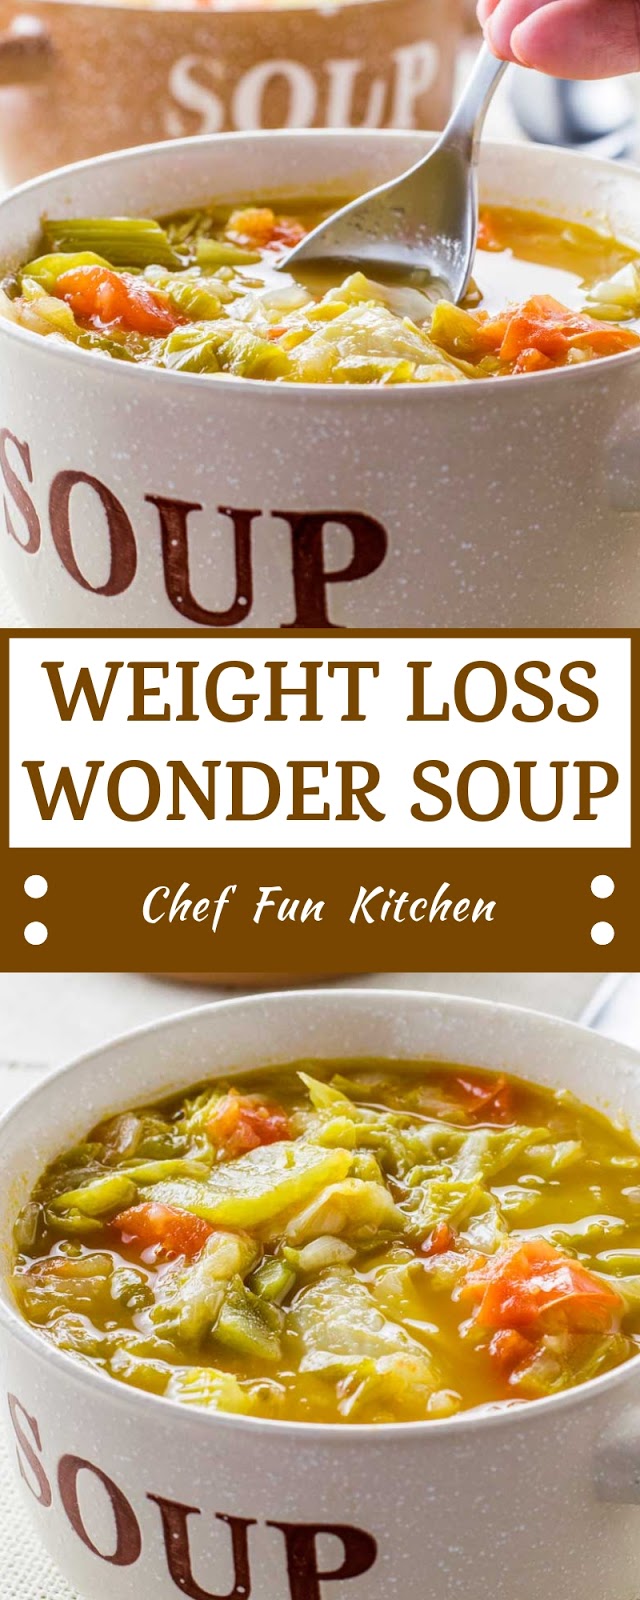 WEIGHT LOSS WONDER SOUP